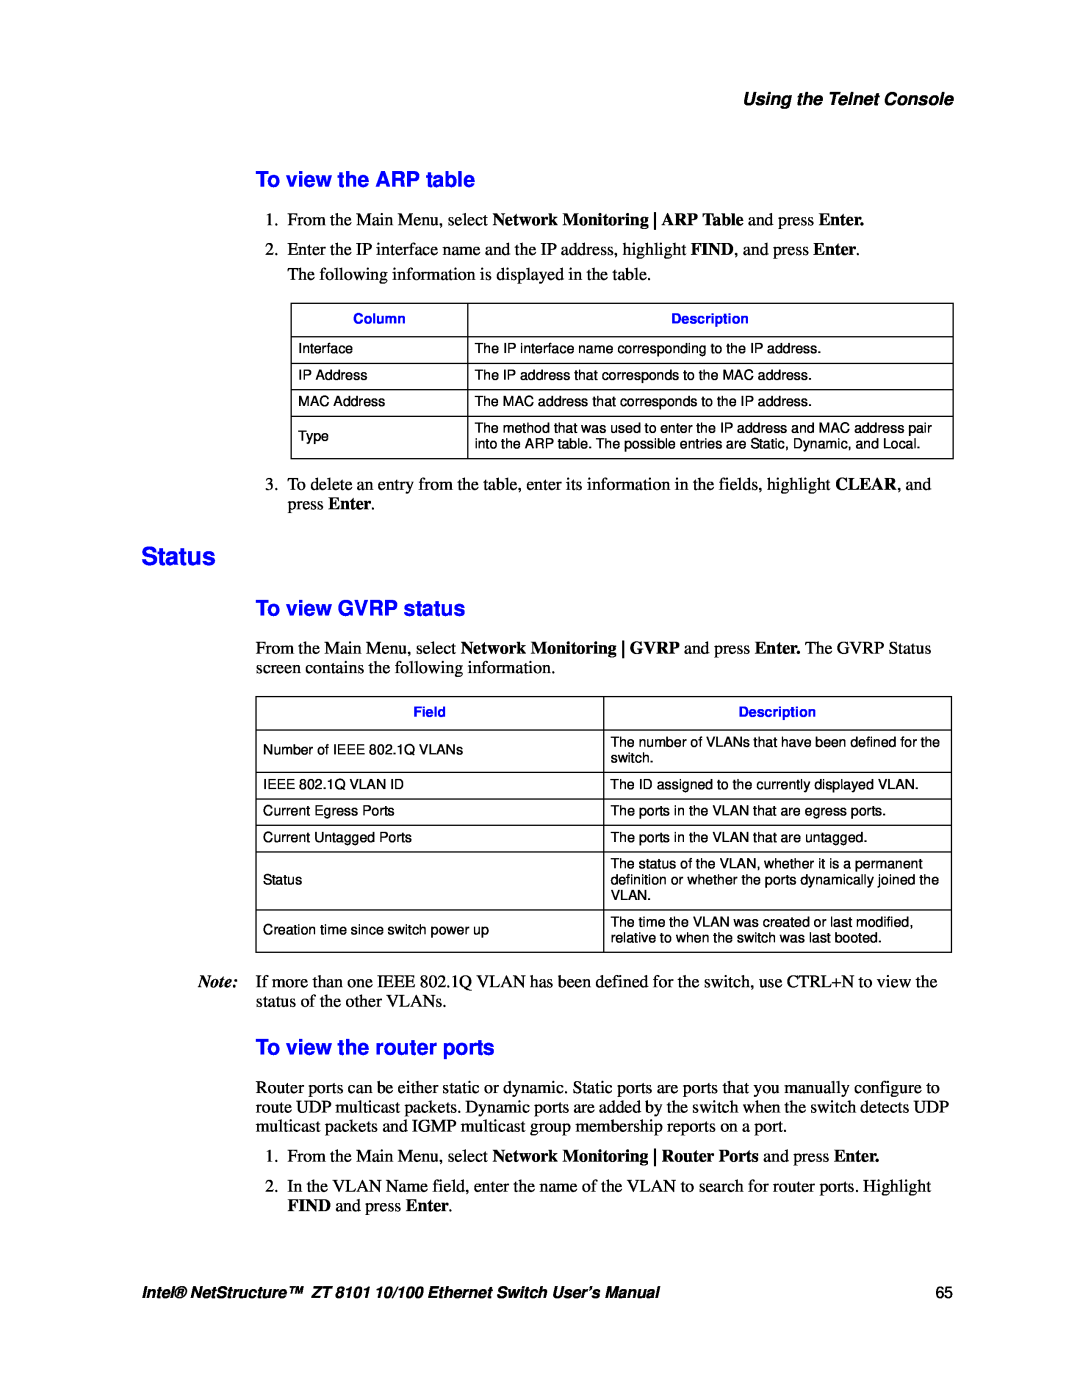 Intel ZT 8101 10/100 user manual Status, To view the ARP table, To view GVRP status, To view the router ports 